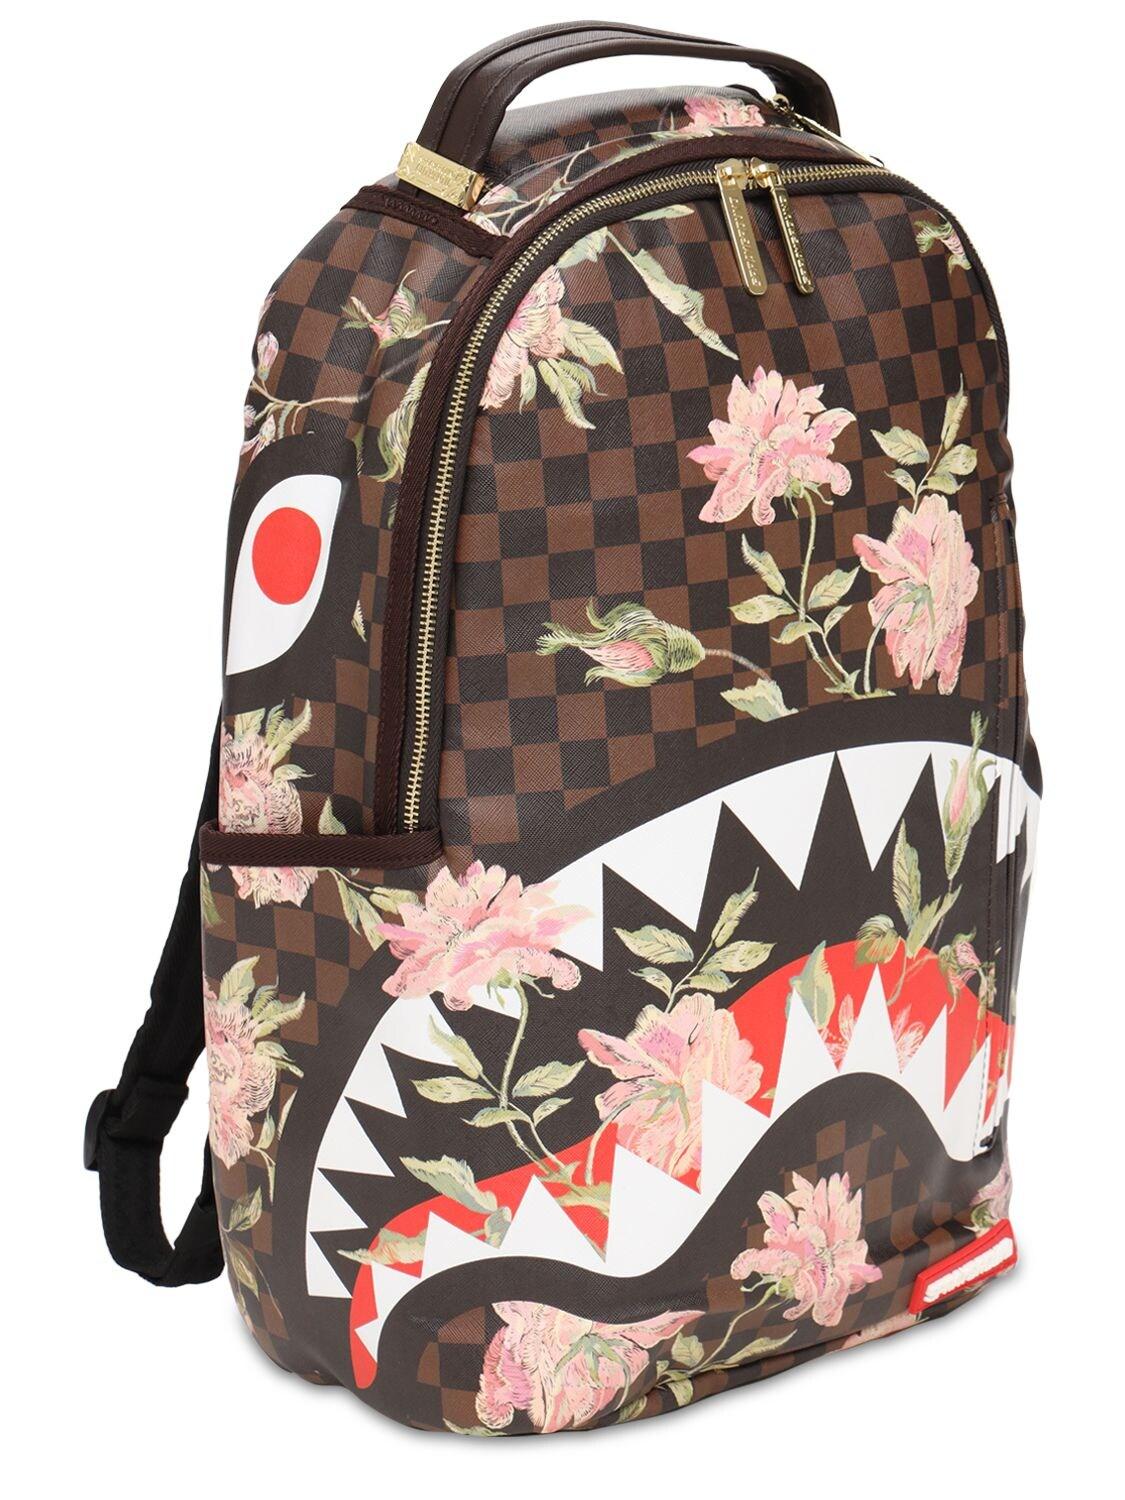 shark pink sprayground backpack